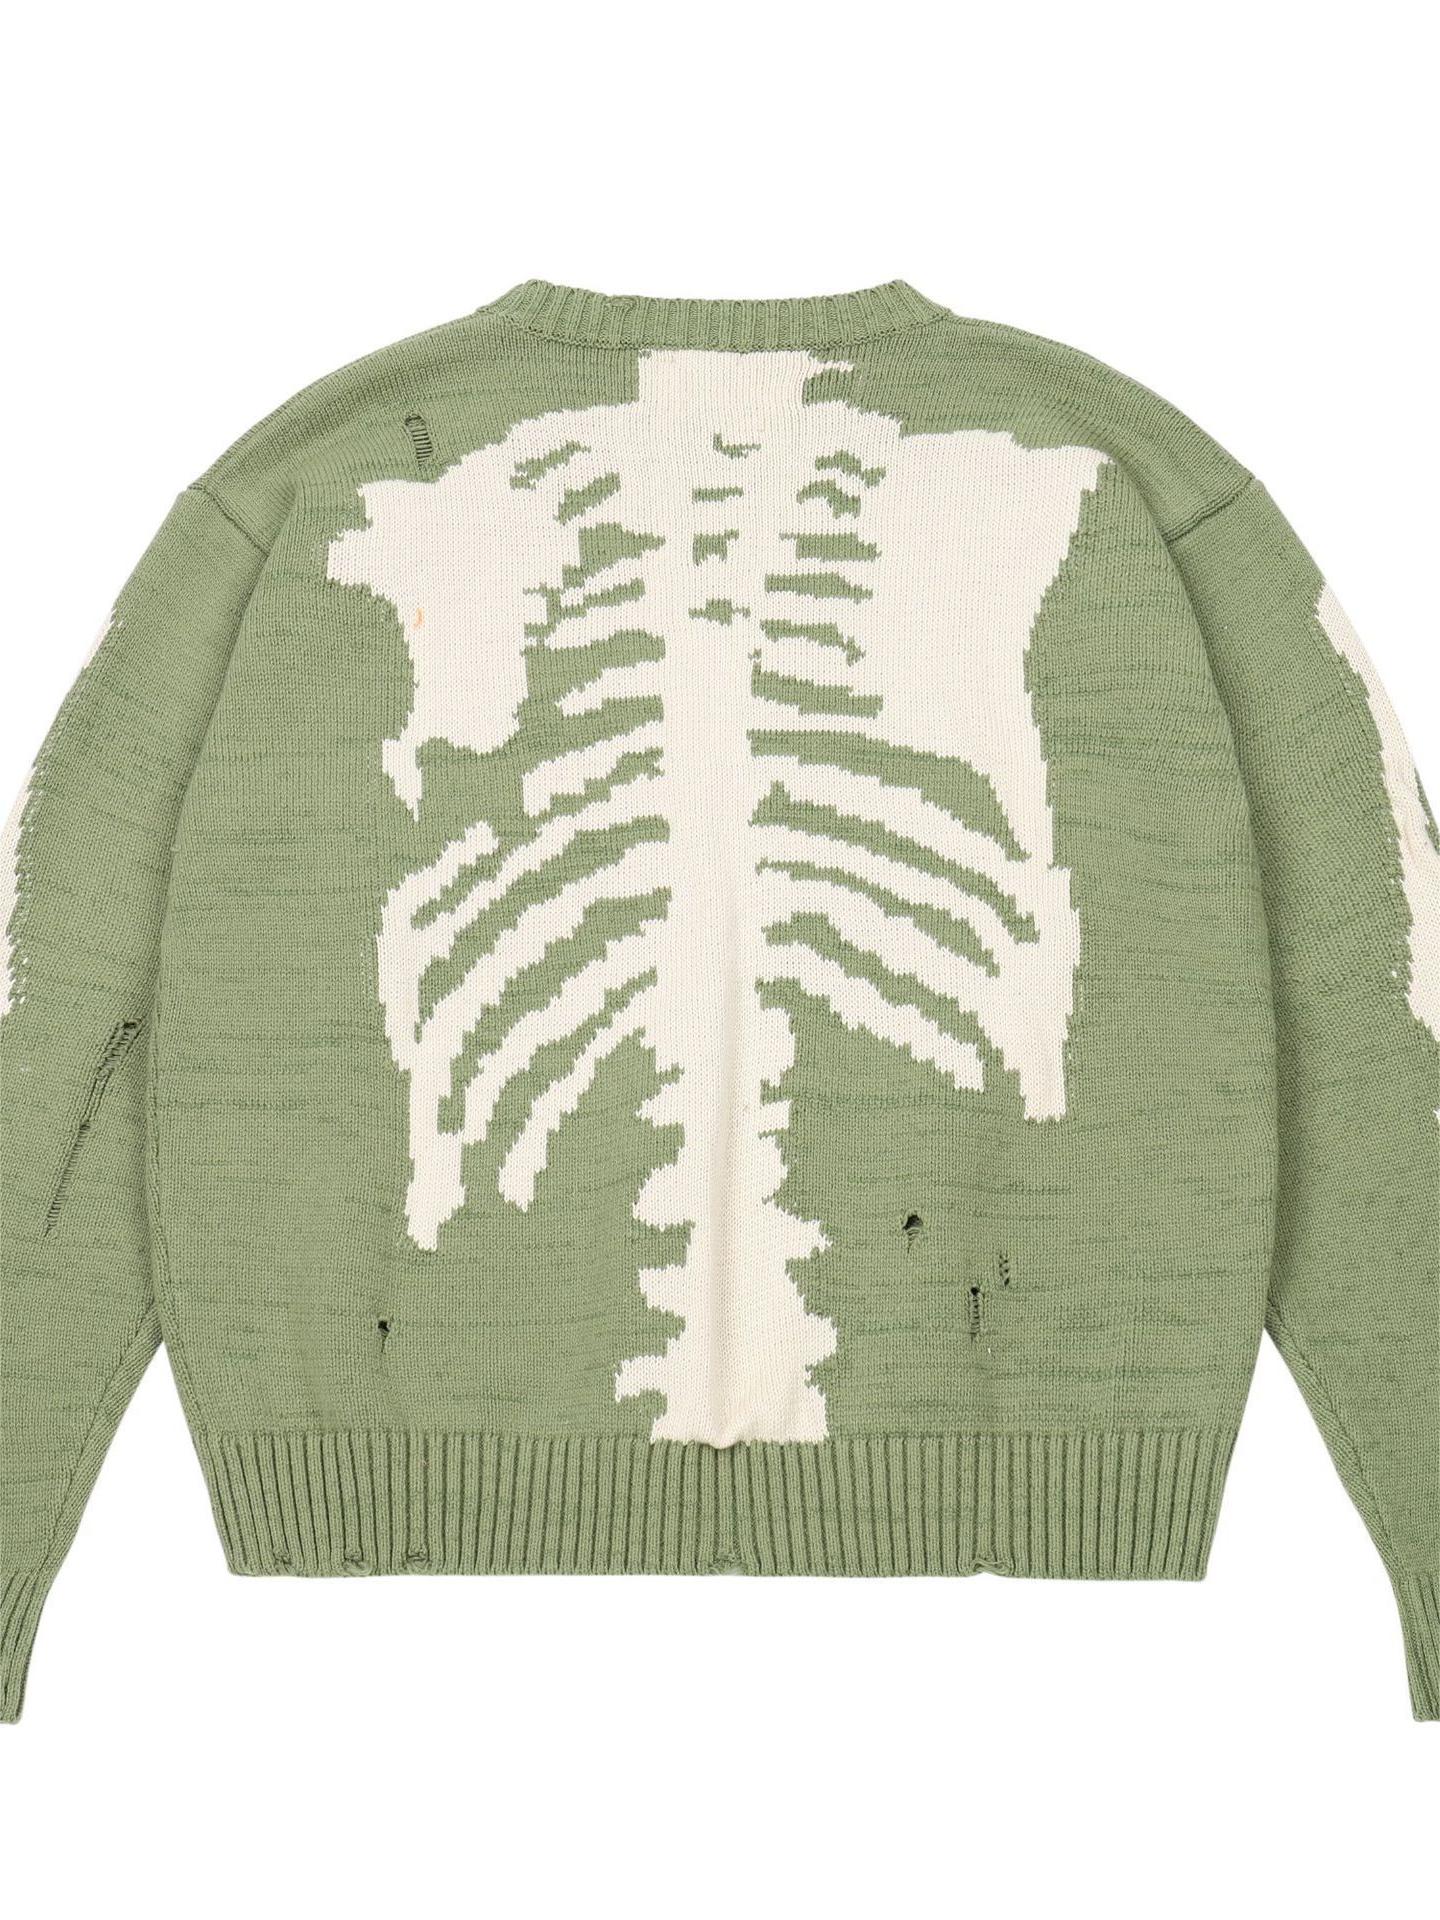 Green oversized skeleton knit jumper